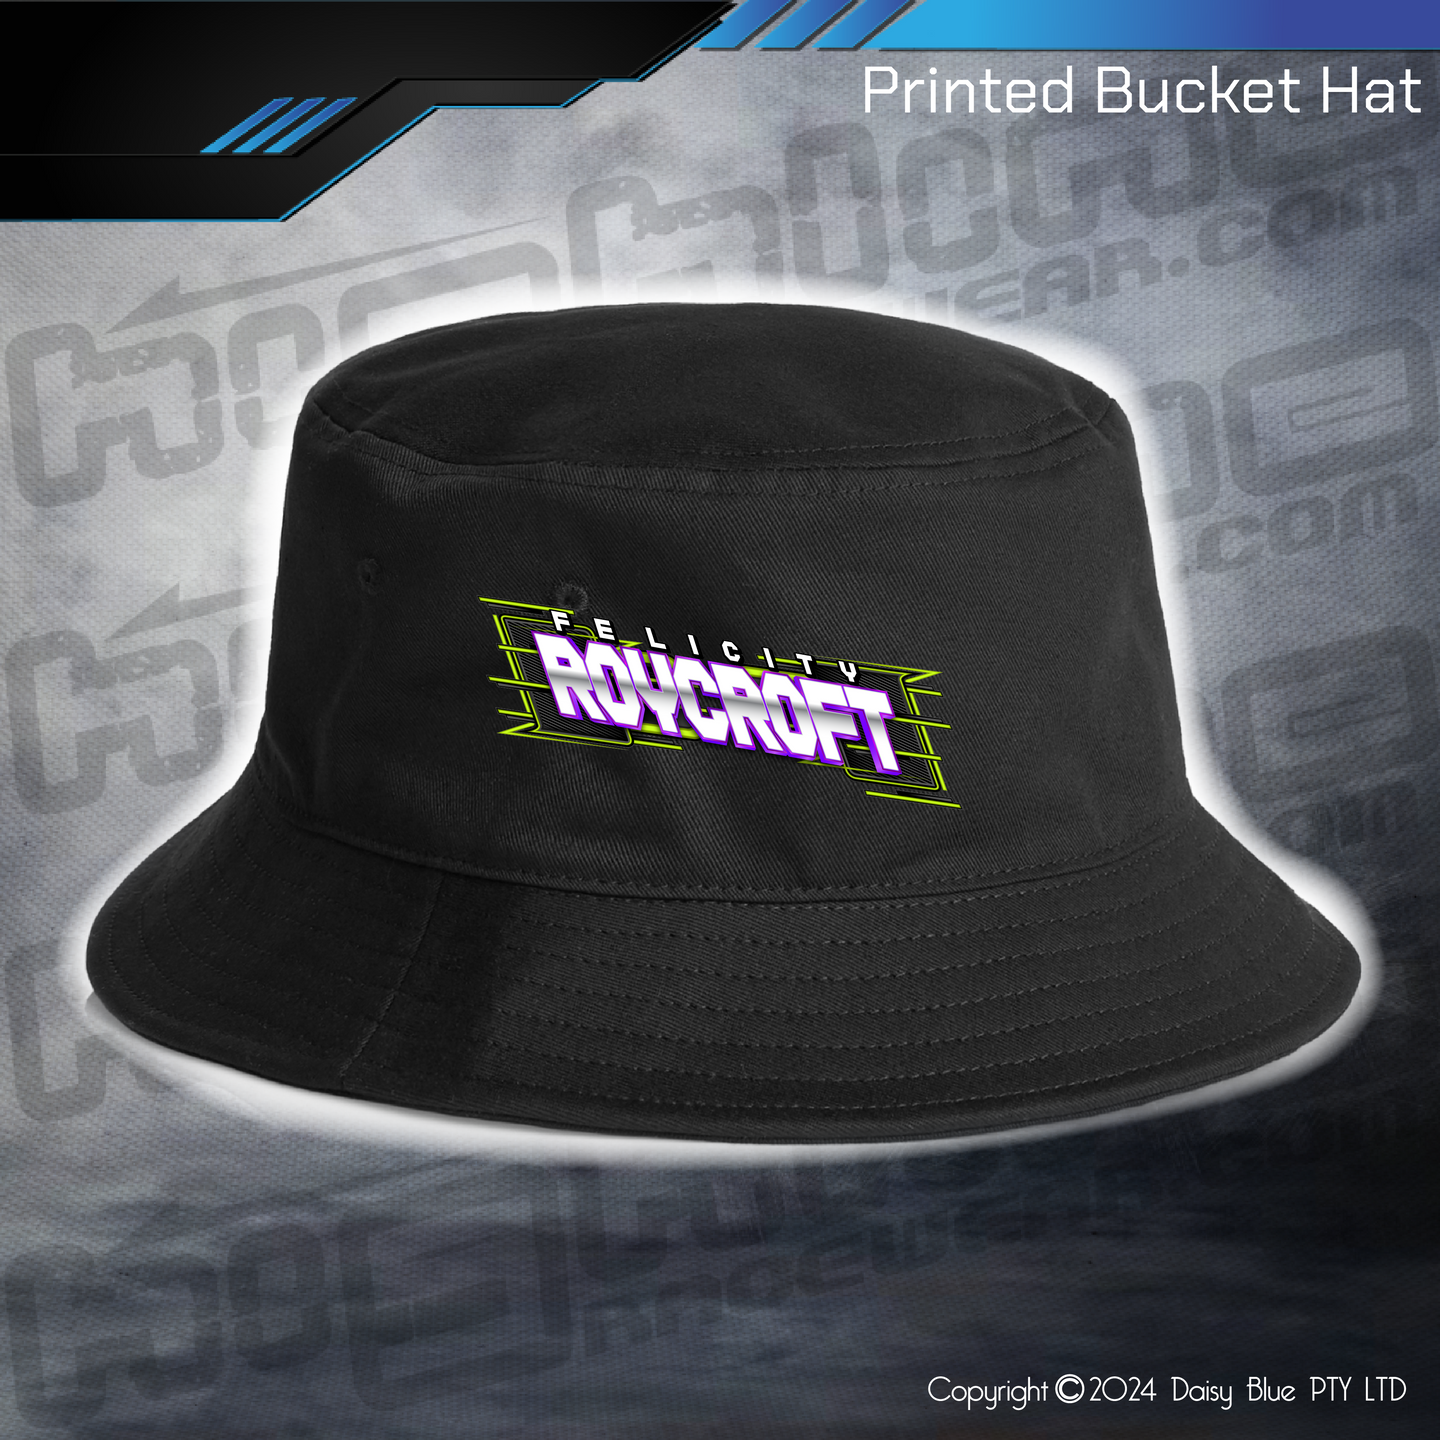 Printed Bucket Hat - Felicity Roycroft